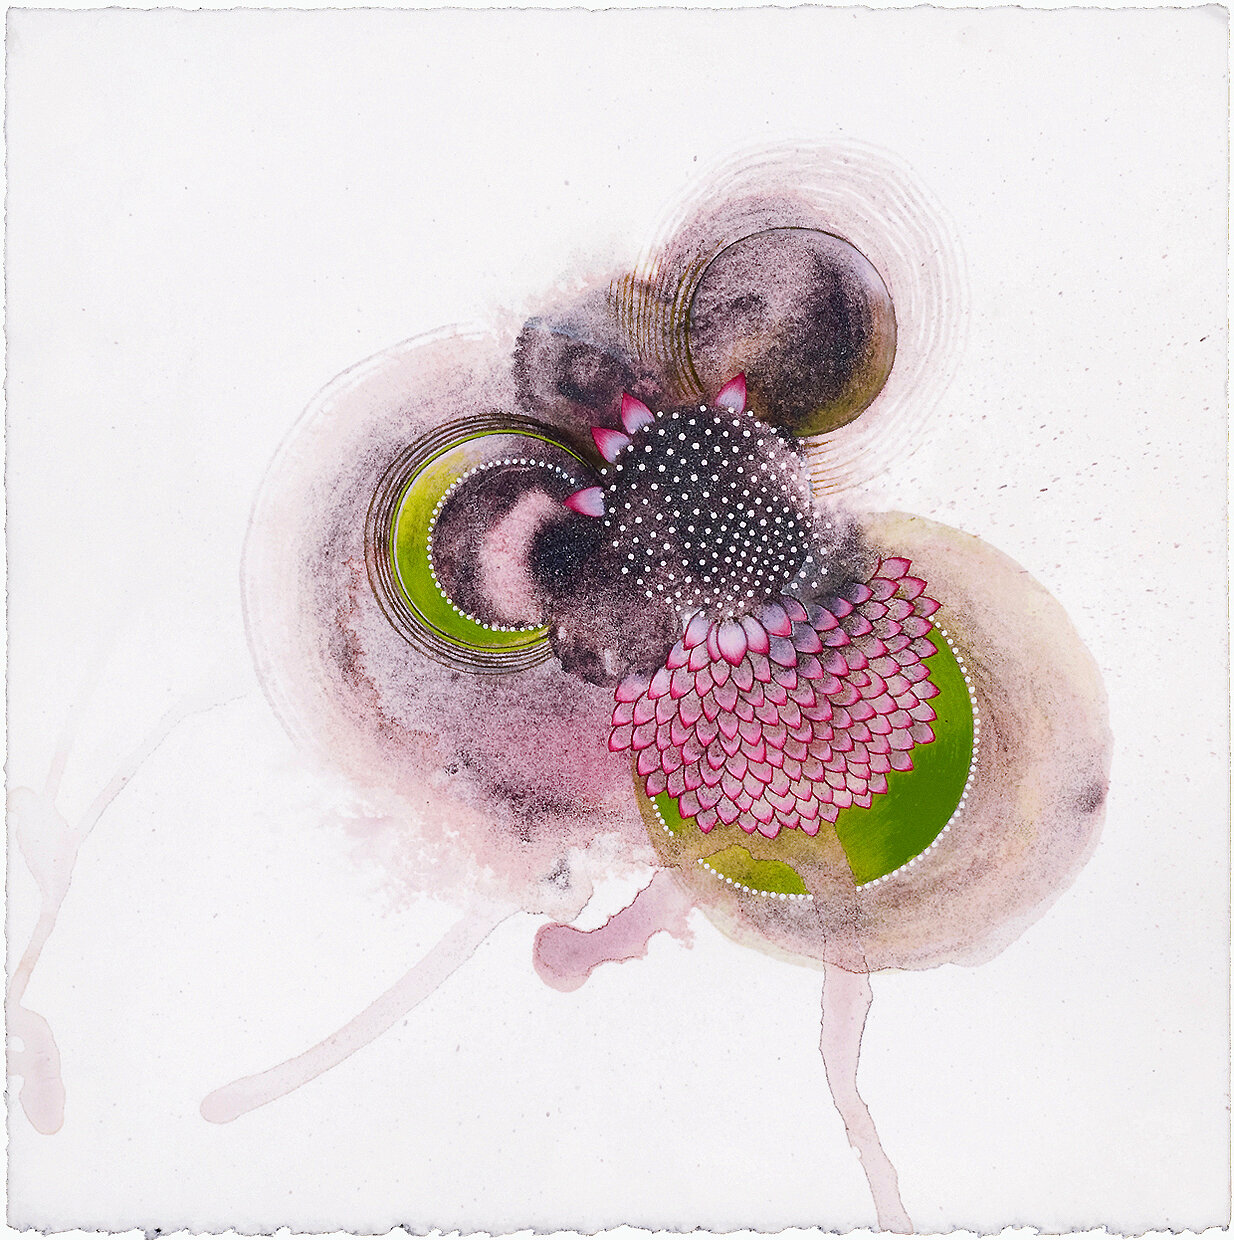   Lotusball , 2010 acrylic, mica, gouache, colored pencil on handmade paper 10” x 10” 